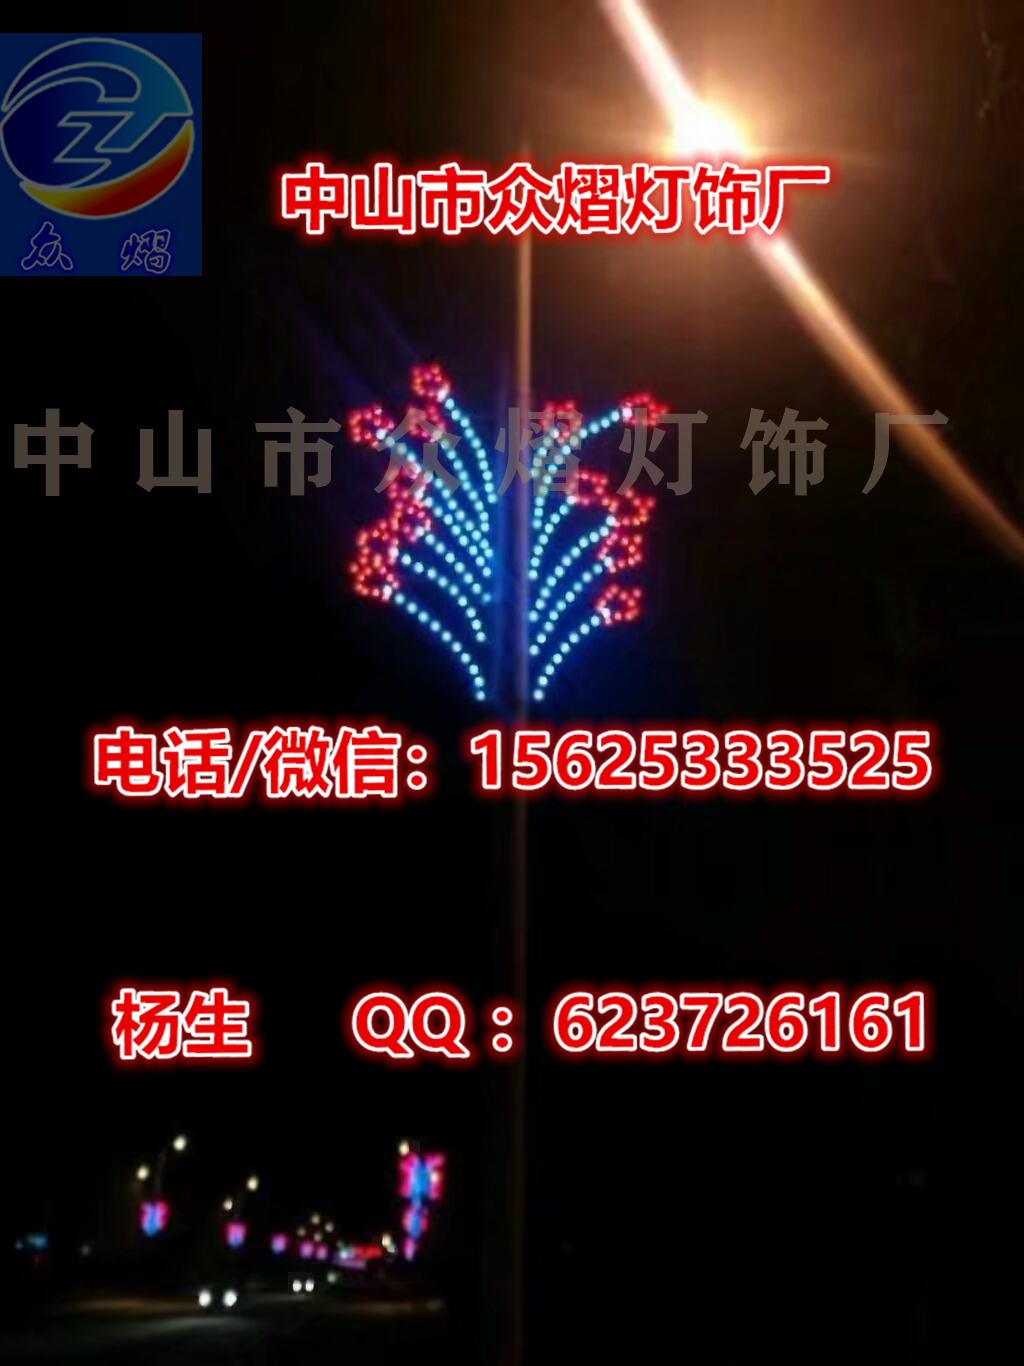 专业生产LED中国结 LED灯笼 LED过街灯 LED灯杆造型灯 LED彩灯